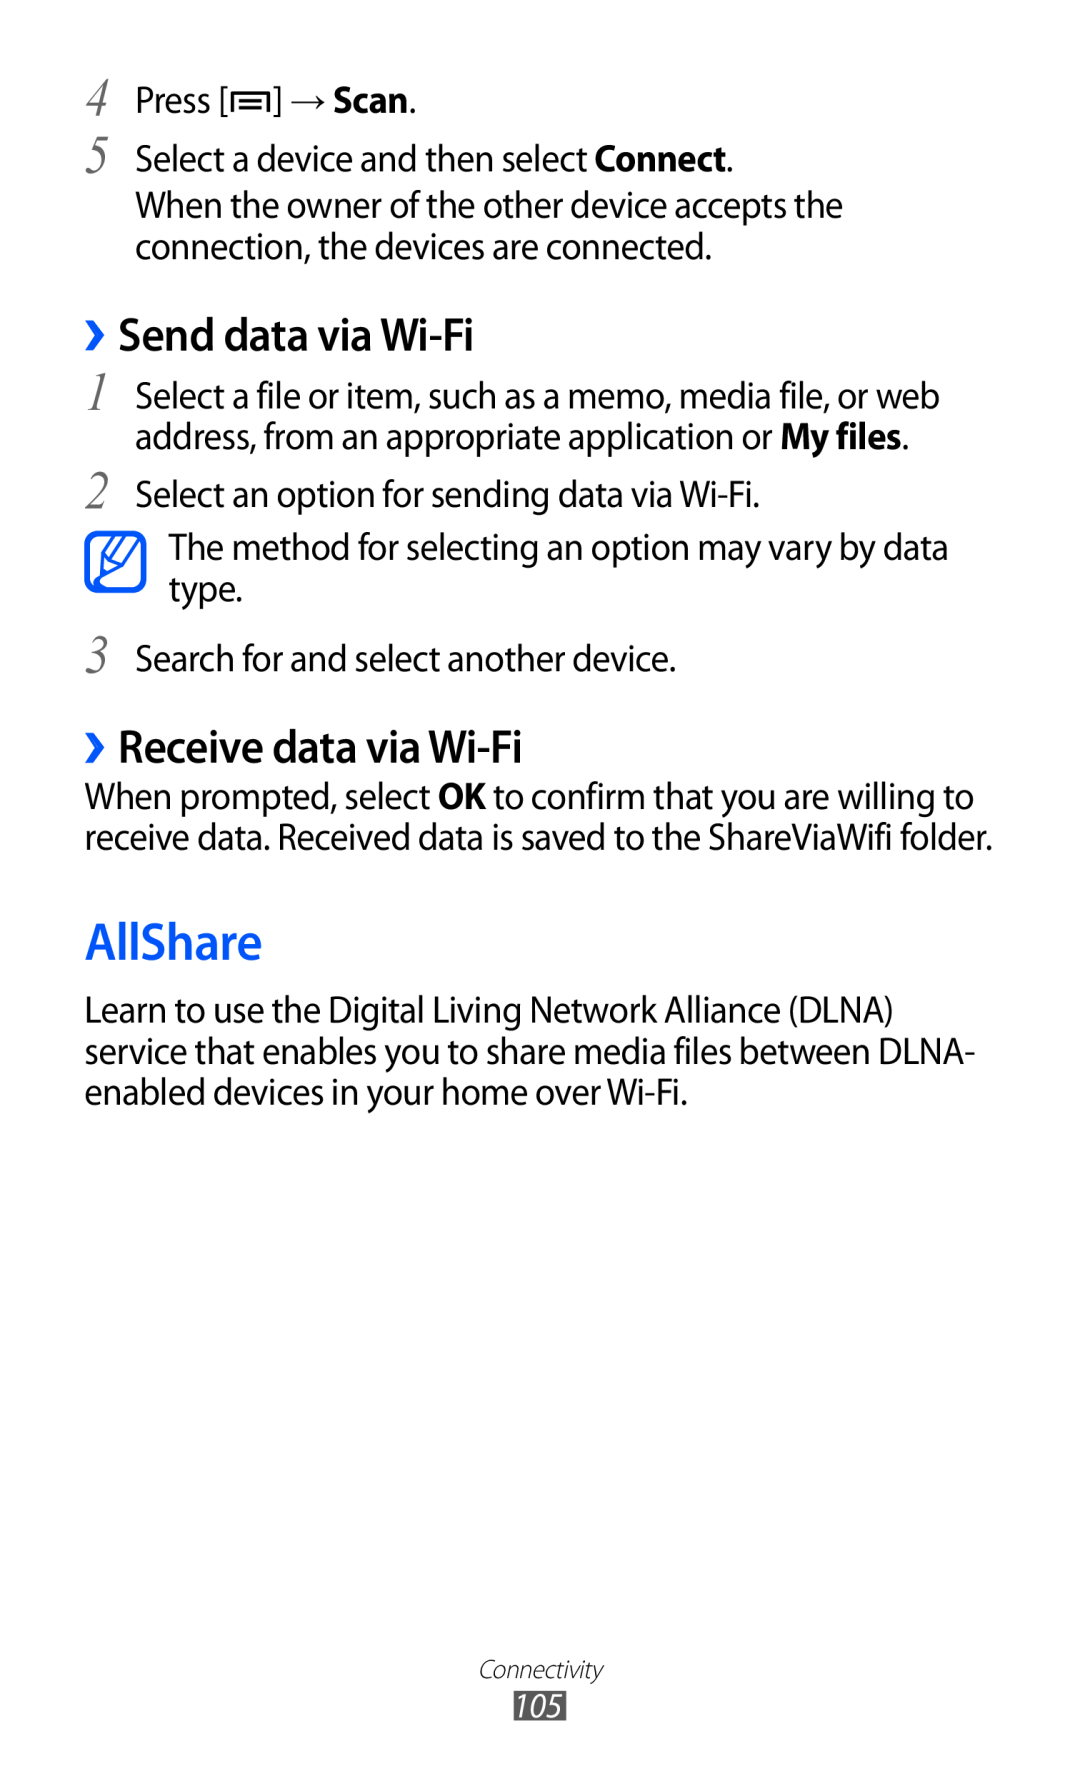 Samsung GT-I9070 user manual AllShare, ››Send data via Wi-Fi, ››Receive data via Wi-Fi 